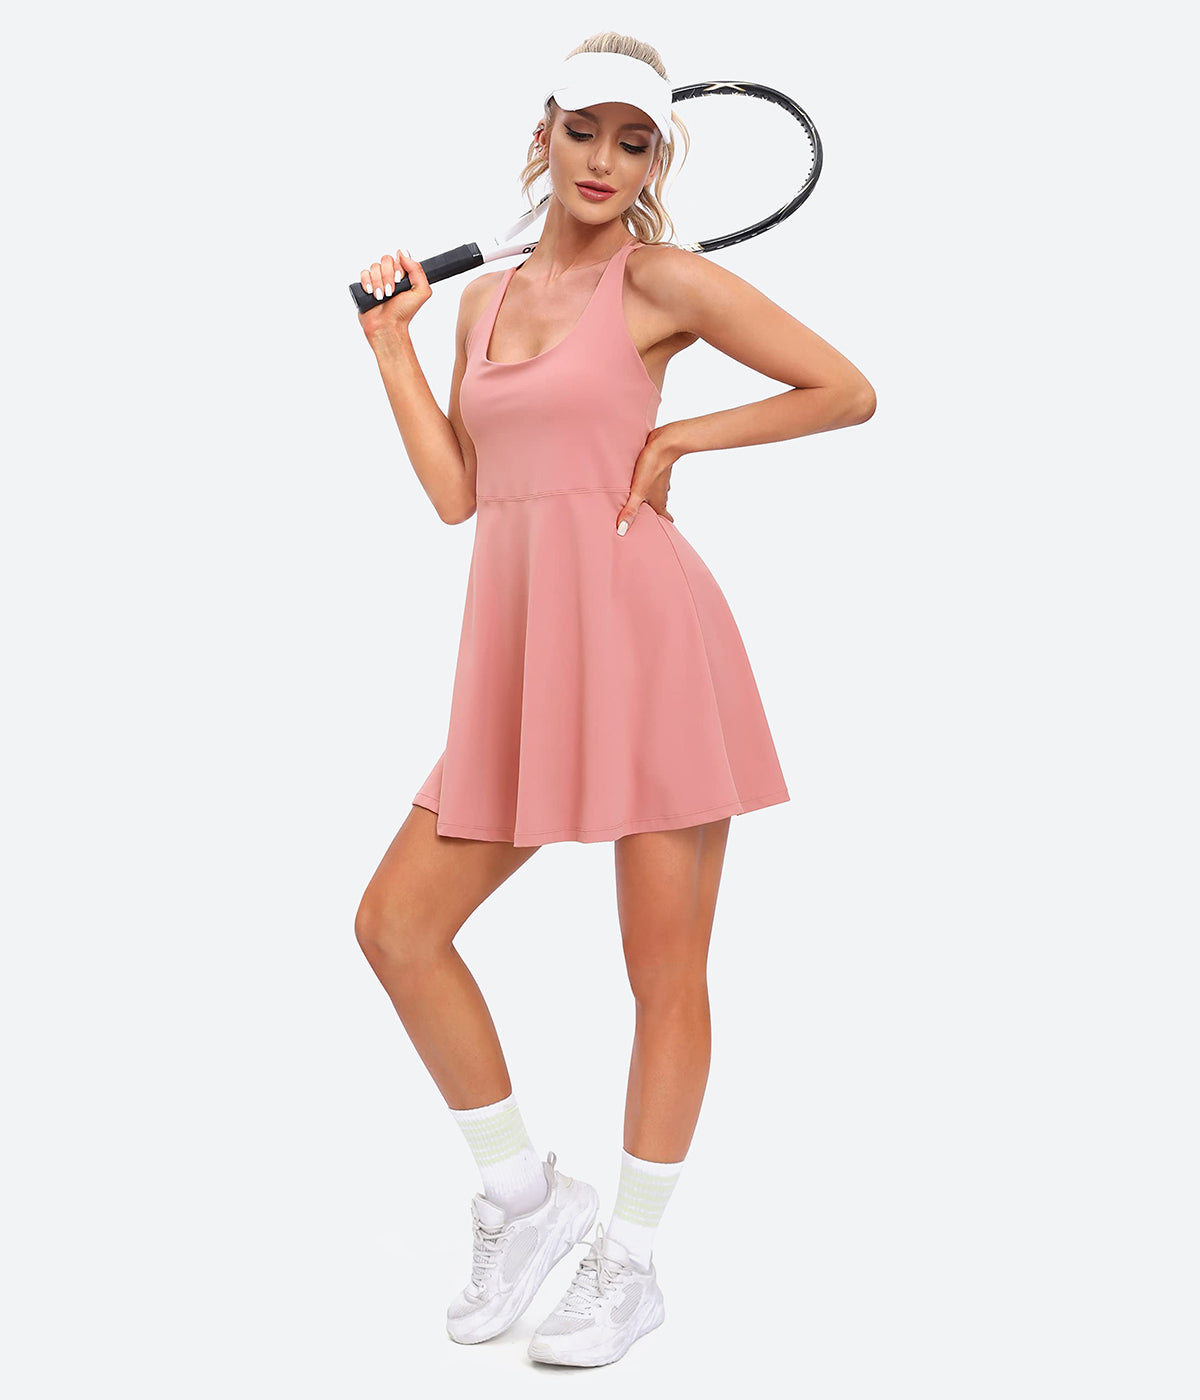  Heathyoga Tennis Dress, Cut Out Twisted Workout Dress